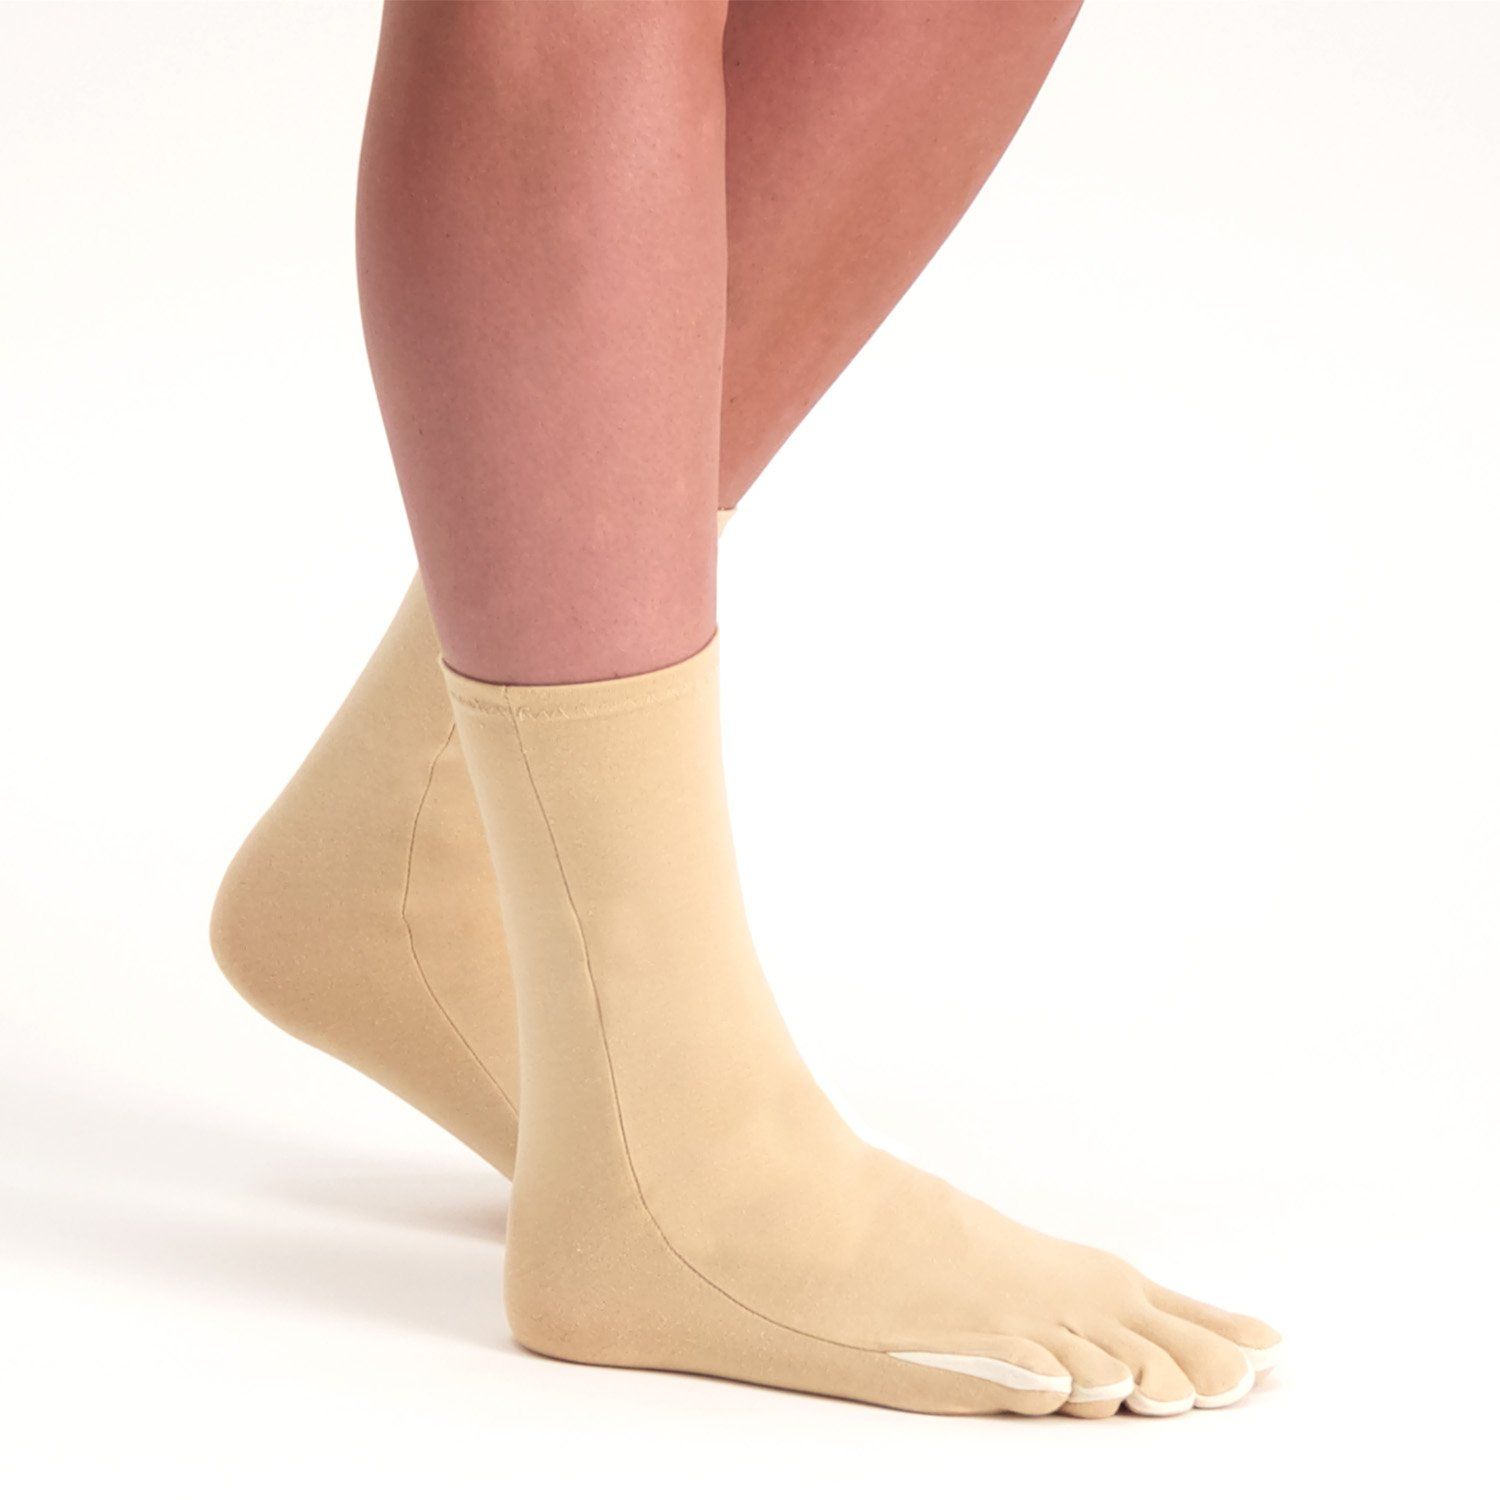 medidu rheumatoid arthritis osteoarthritis socks beige worn